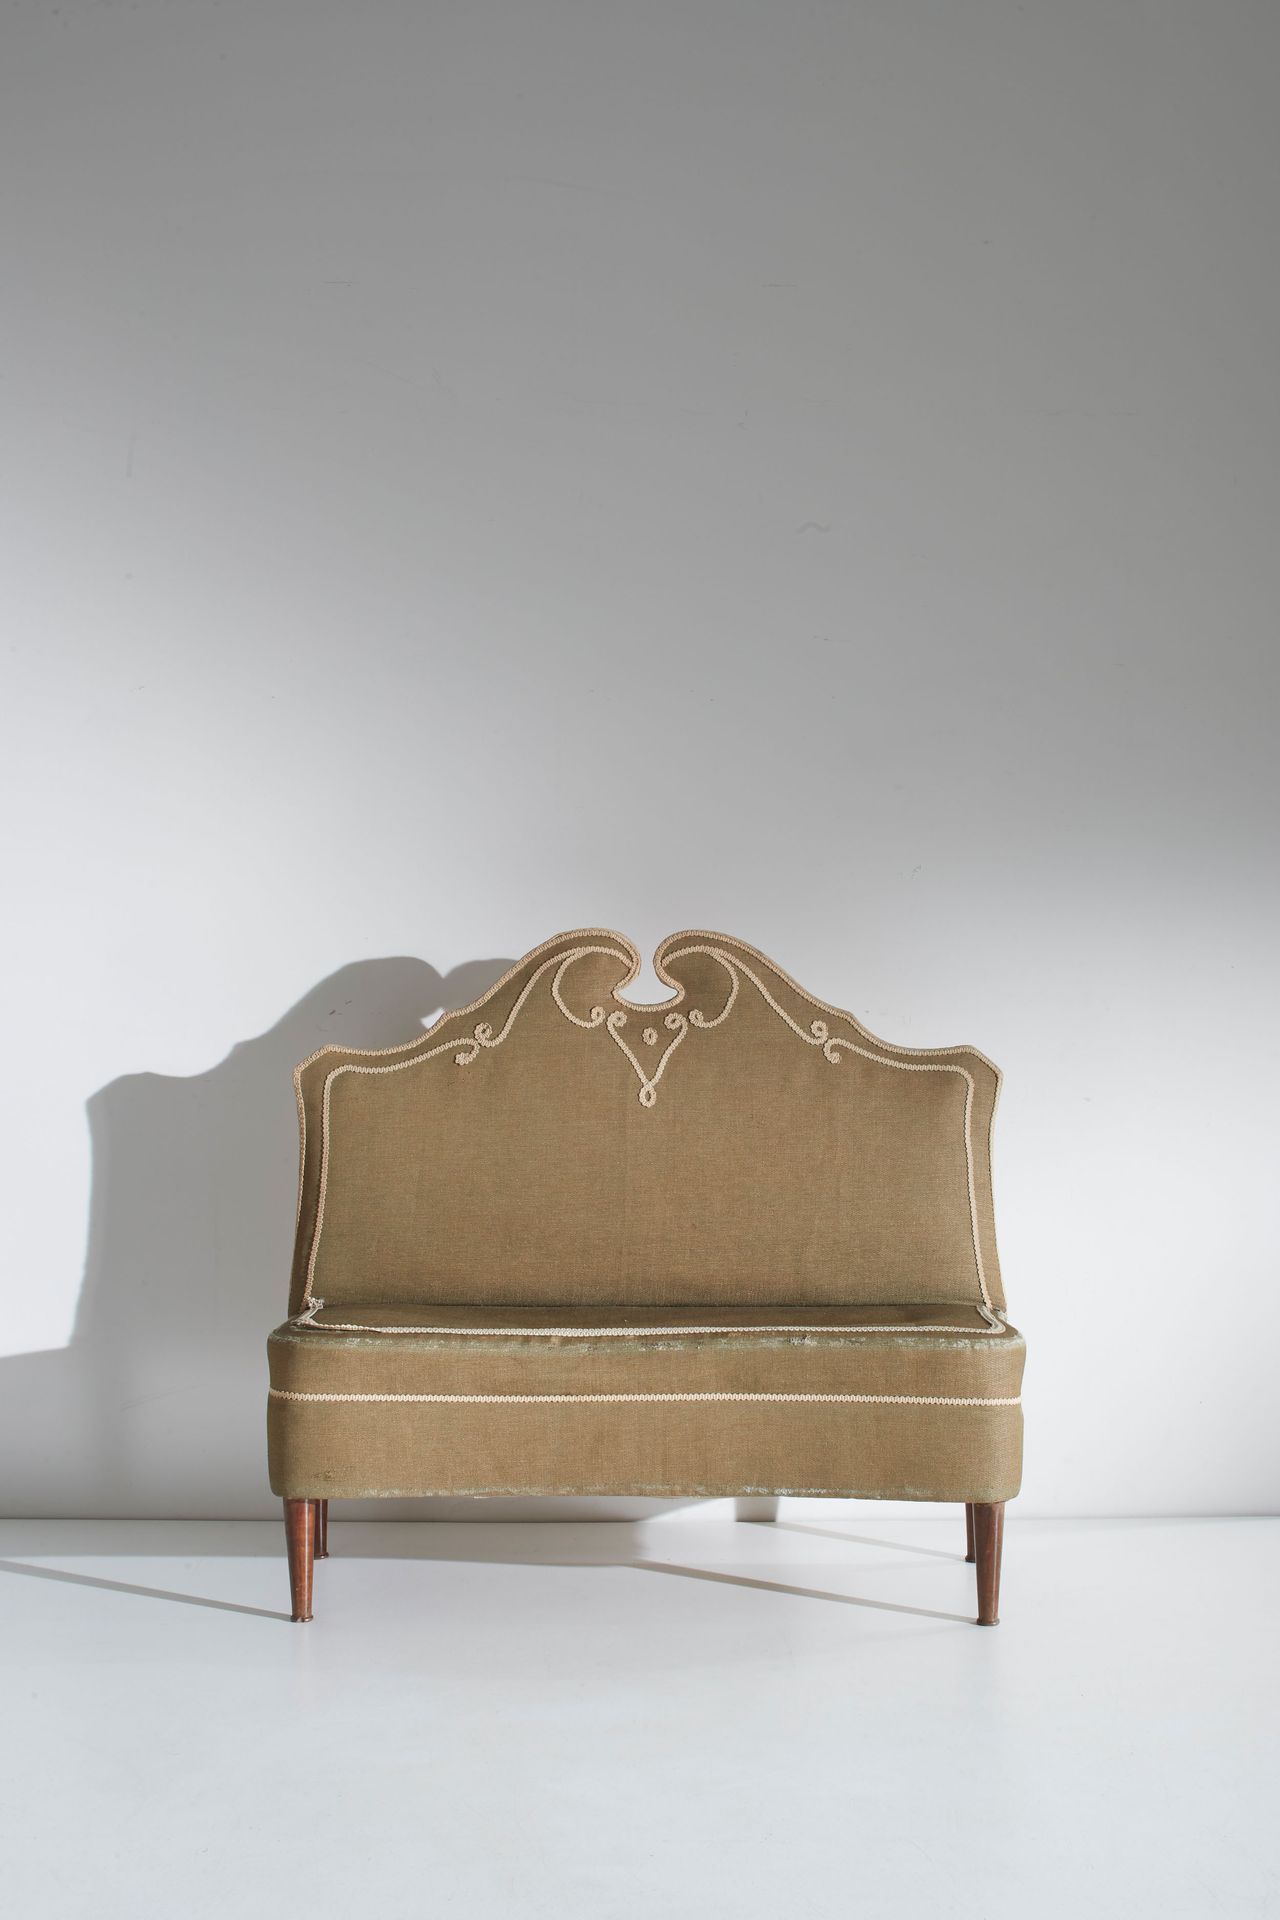 Manifattura Italiana 入口处的长椅。胡桃木翻转，软垫织物。意大利 1950年代。
cm 107x120x46
AN ITALIAN BENC&hellip;